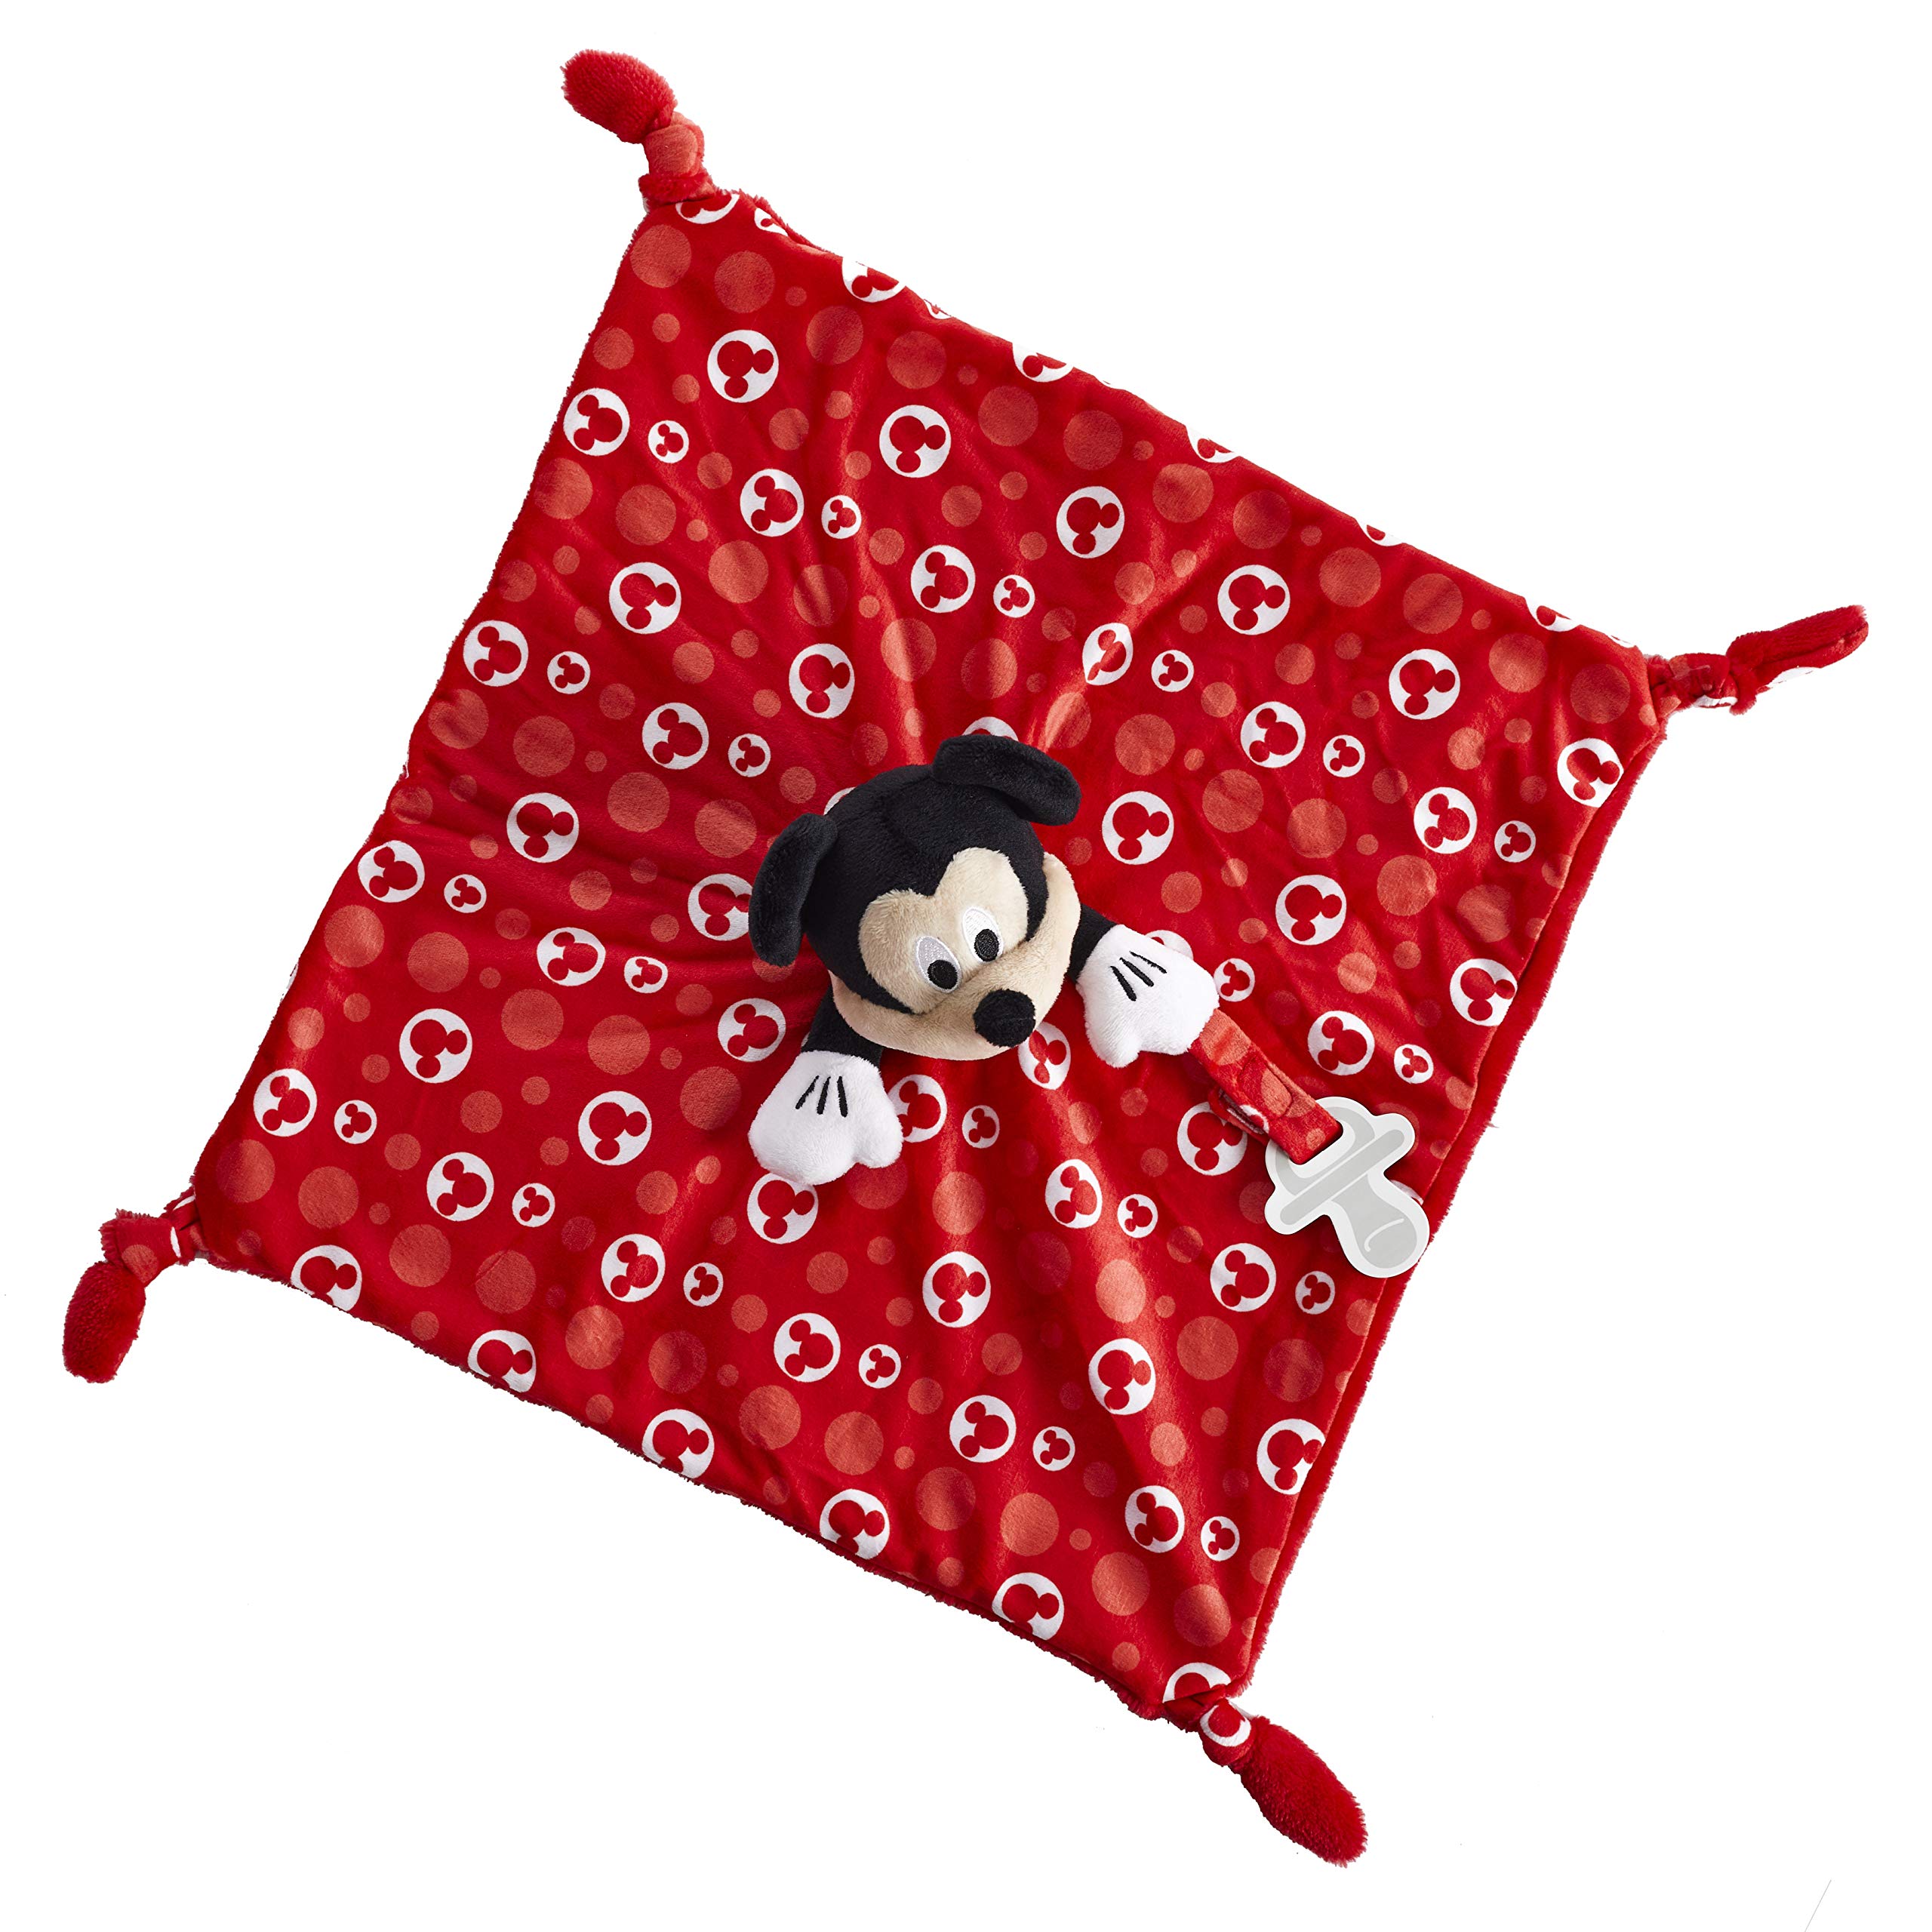 KIDS PREFERRED Disney Baby Mickey Mouse Plush Stuffed Animal Snuggler Lovey Security Blanket 13.18